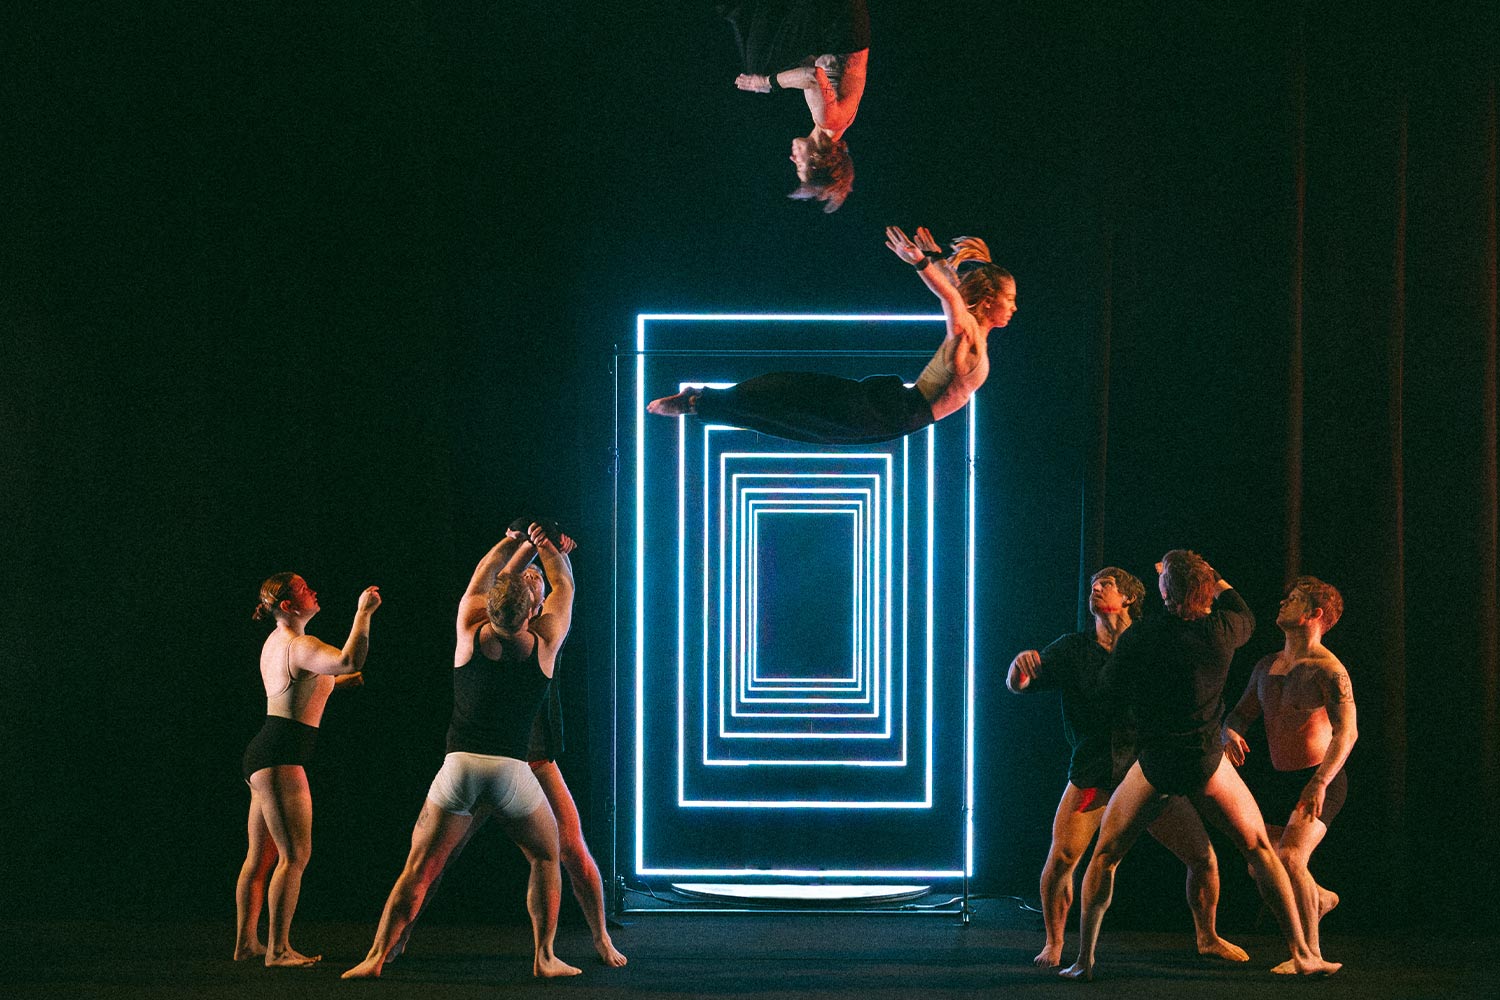 Acrobats perform in front of neon rectangles